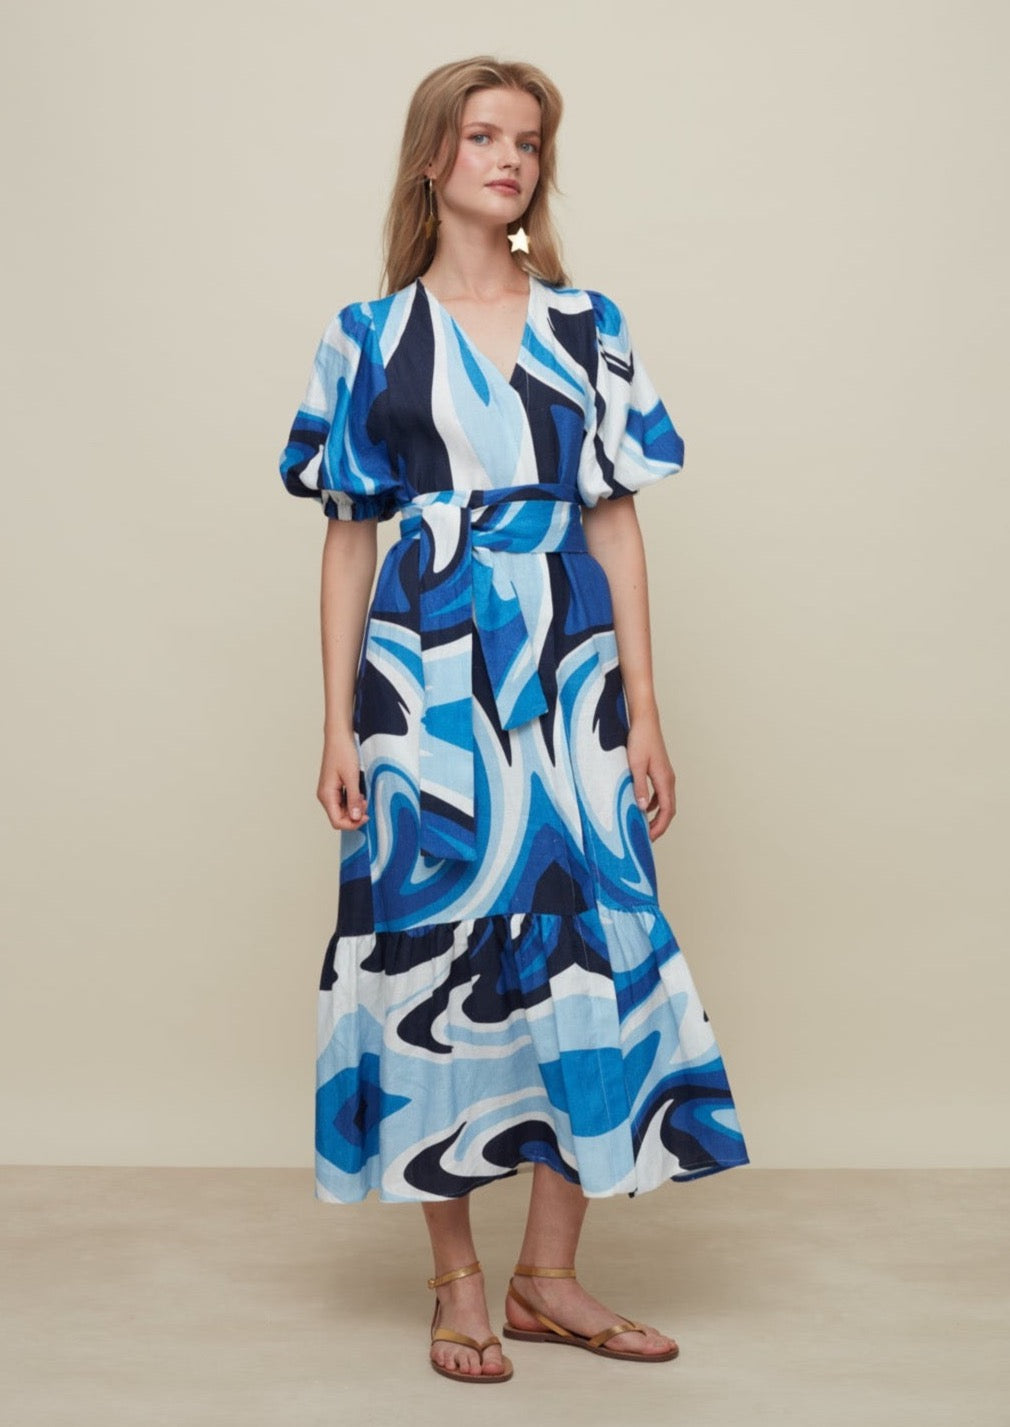 Galeria-Urca Liquid Blue Dress-Justbrazil